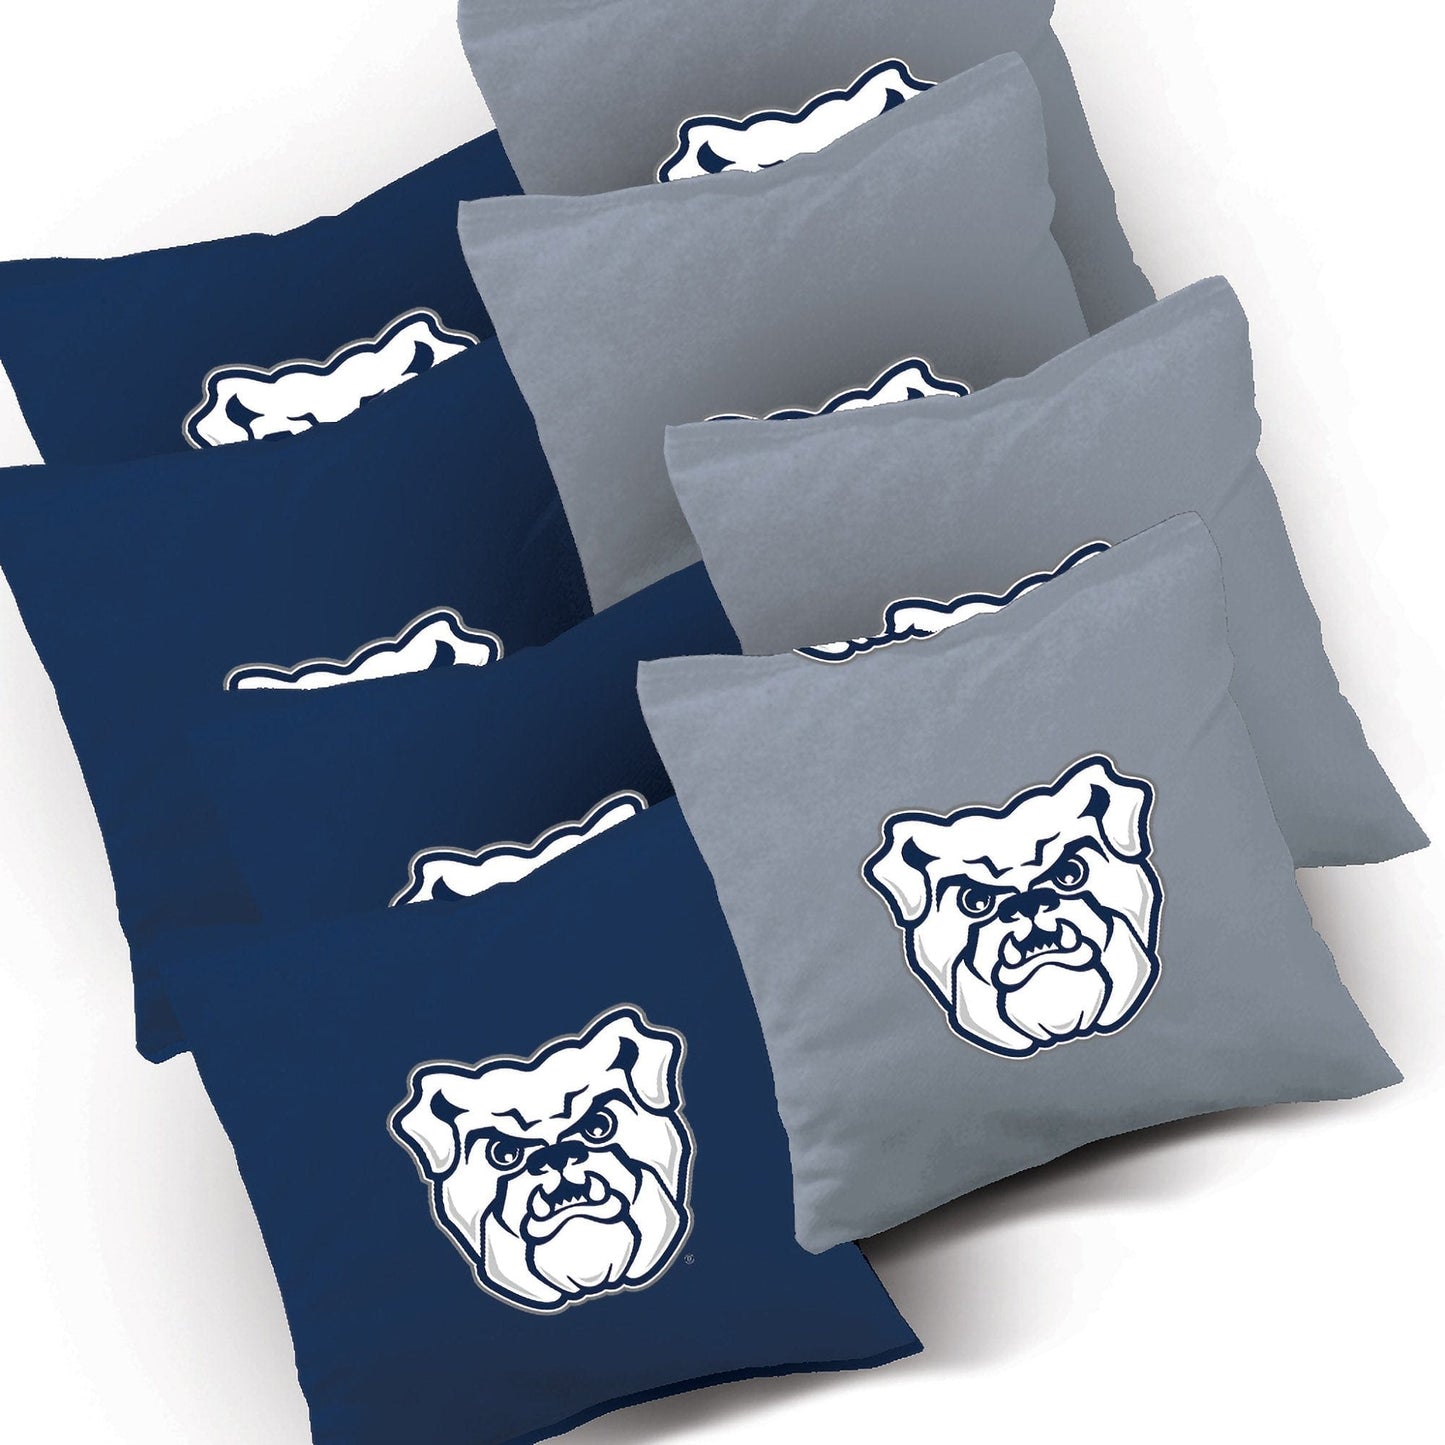 Butler Bulldogs Swoosh team logo bags